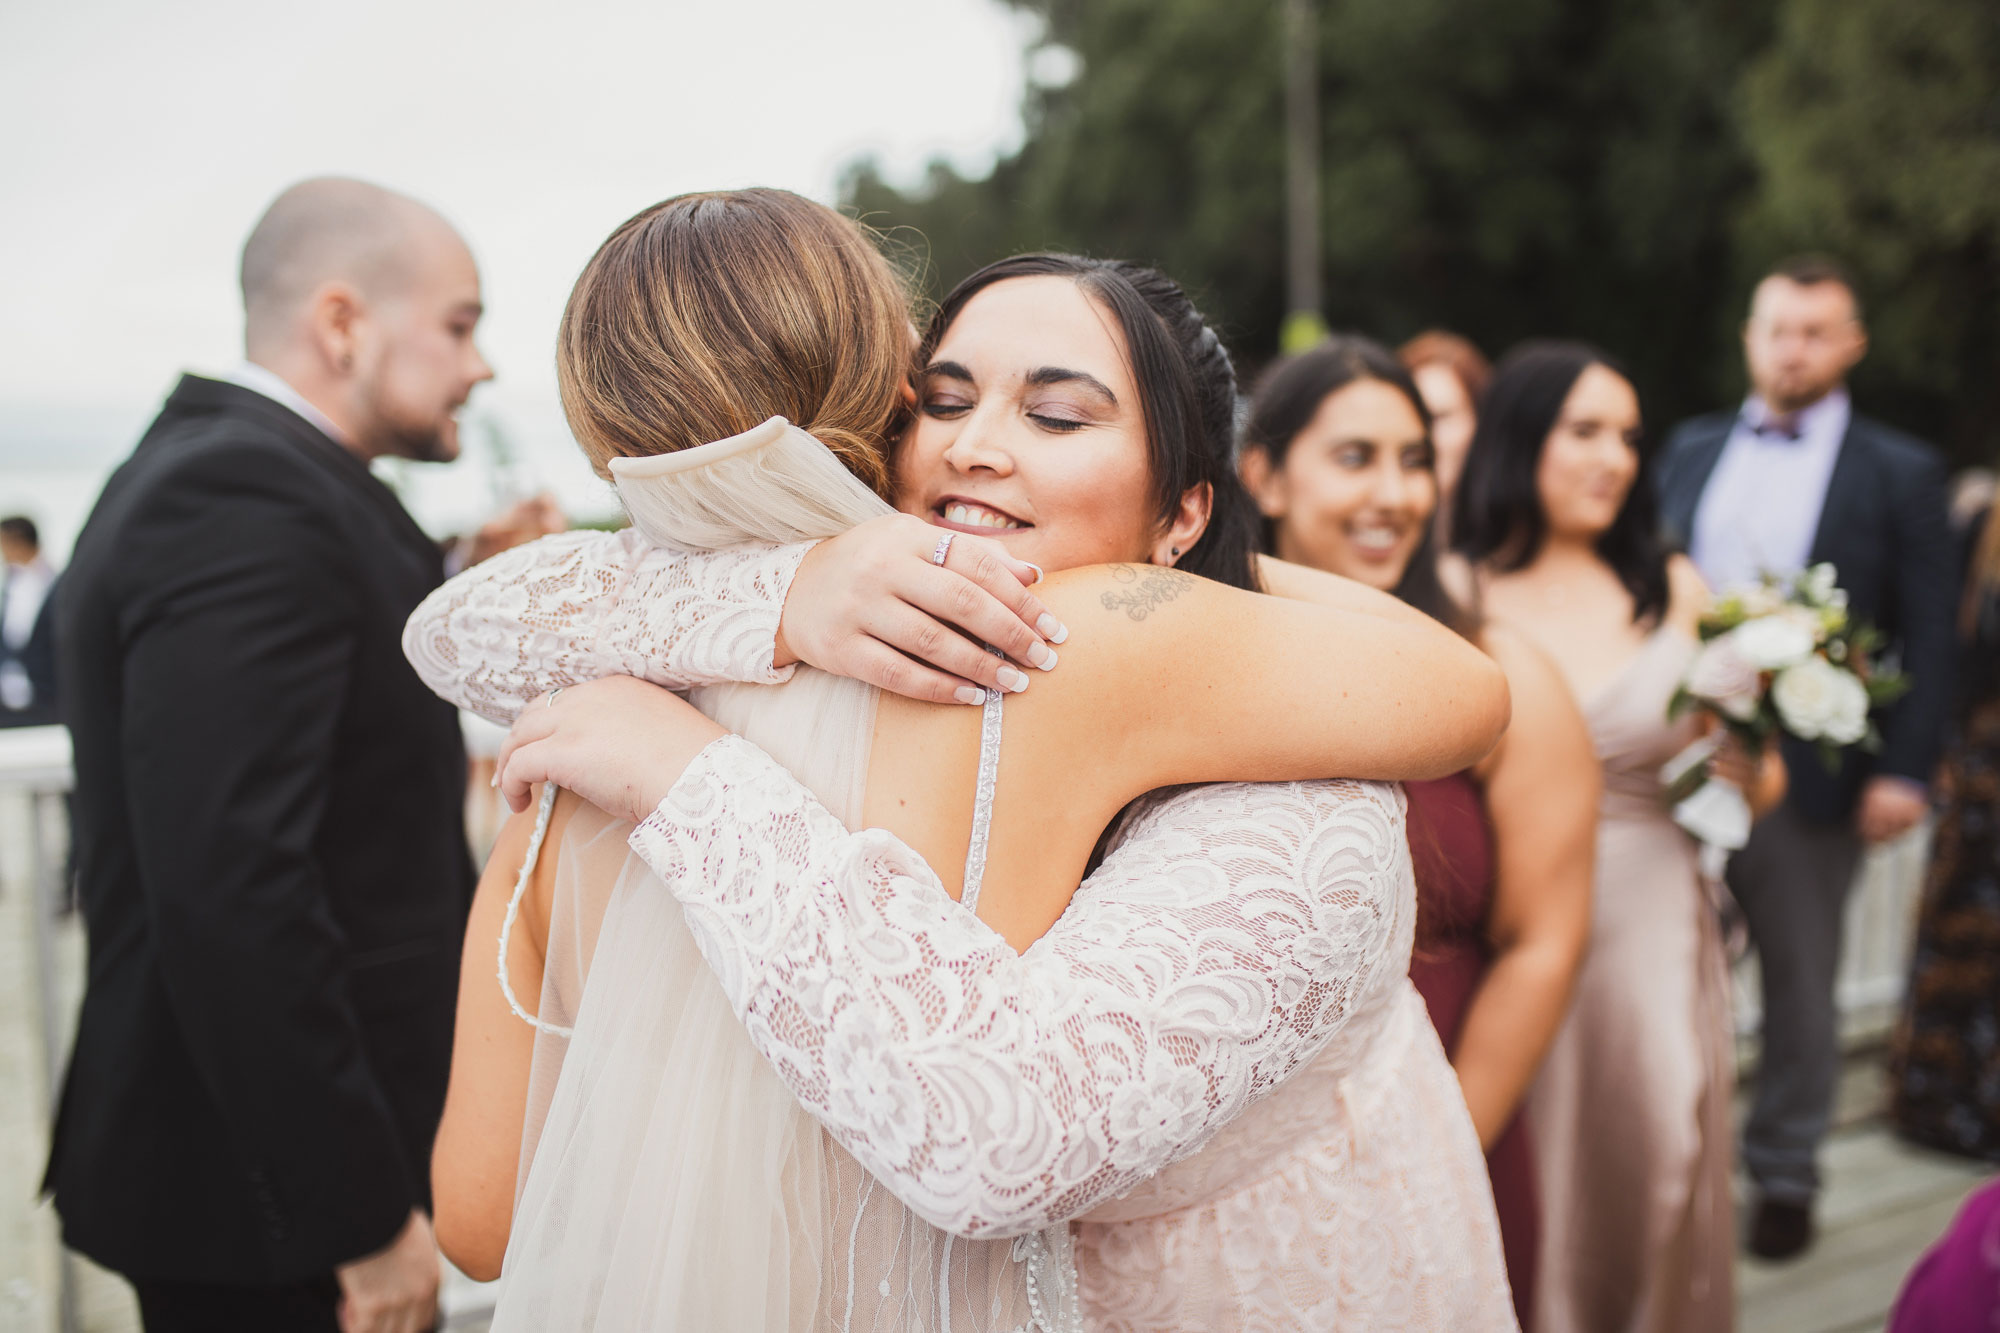 guest hugging the bride